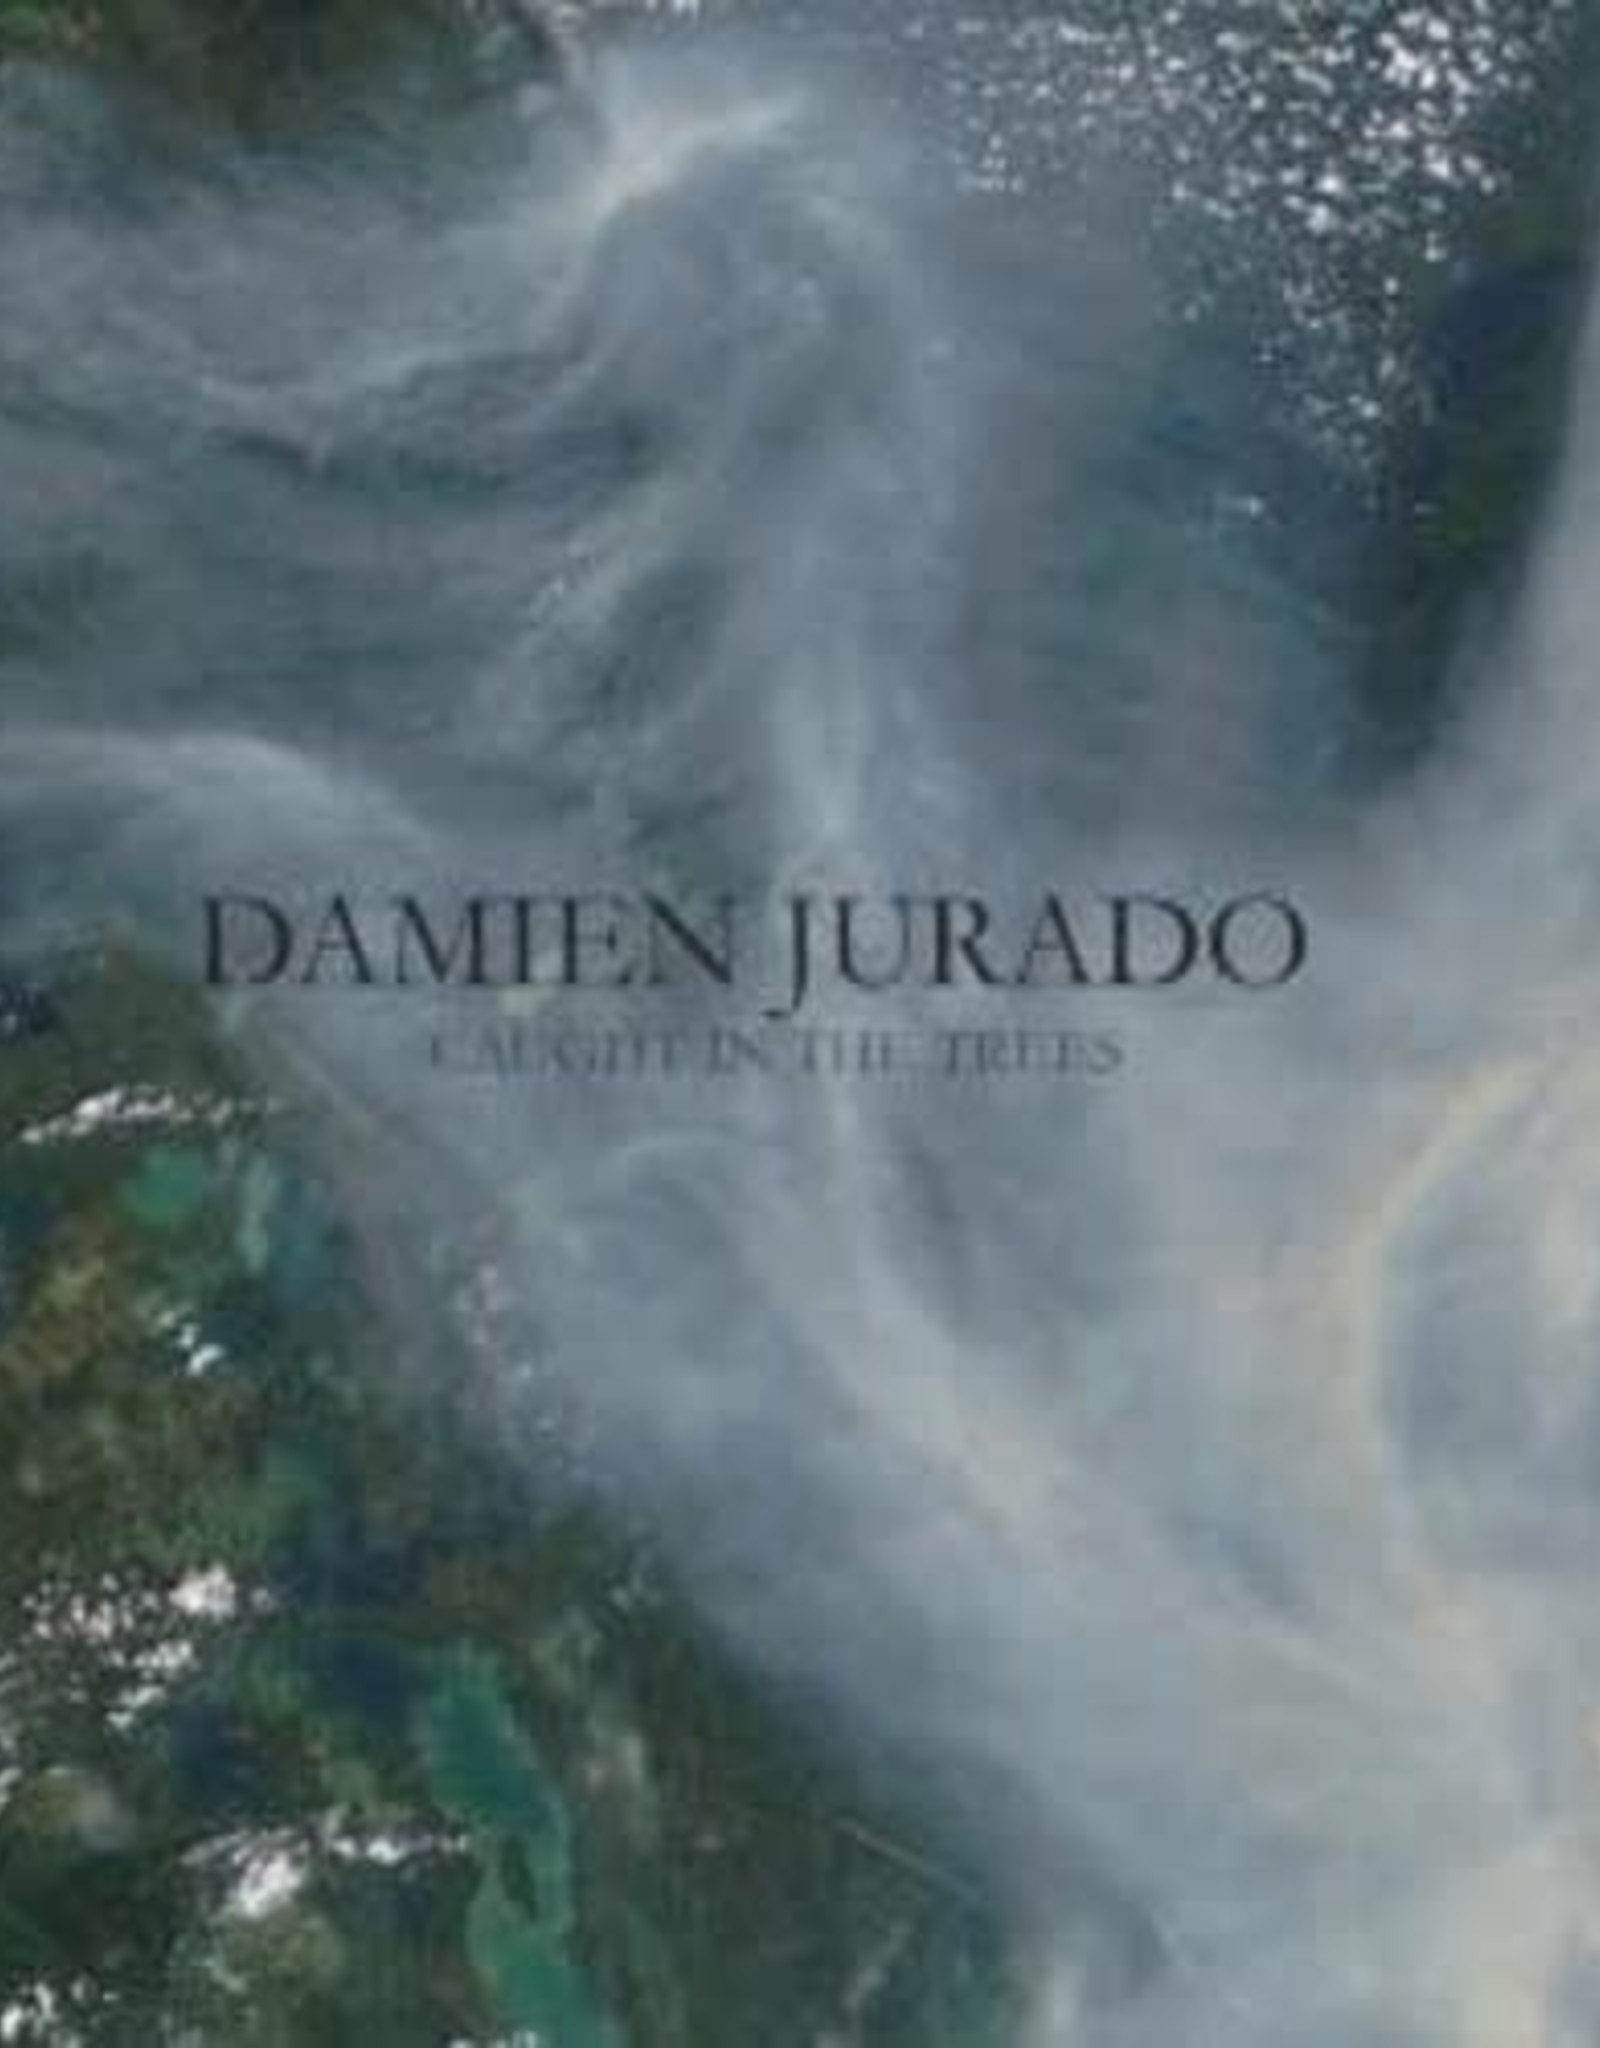 Damian Jurado - Caught in the Trees